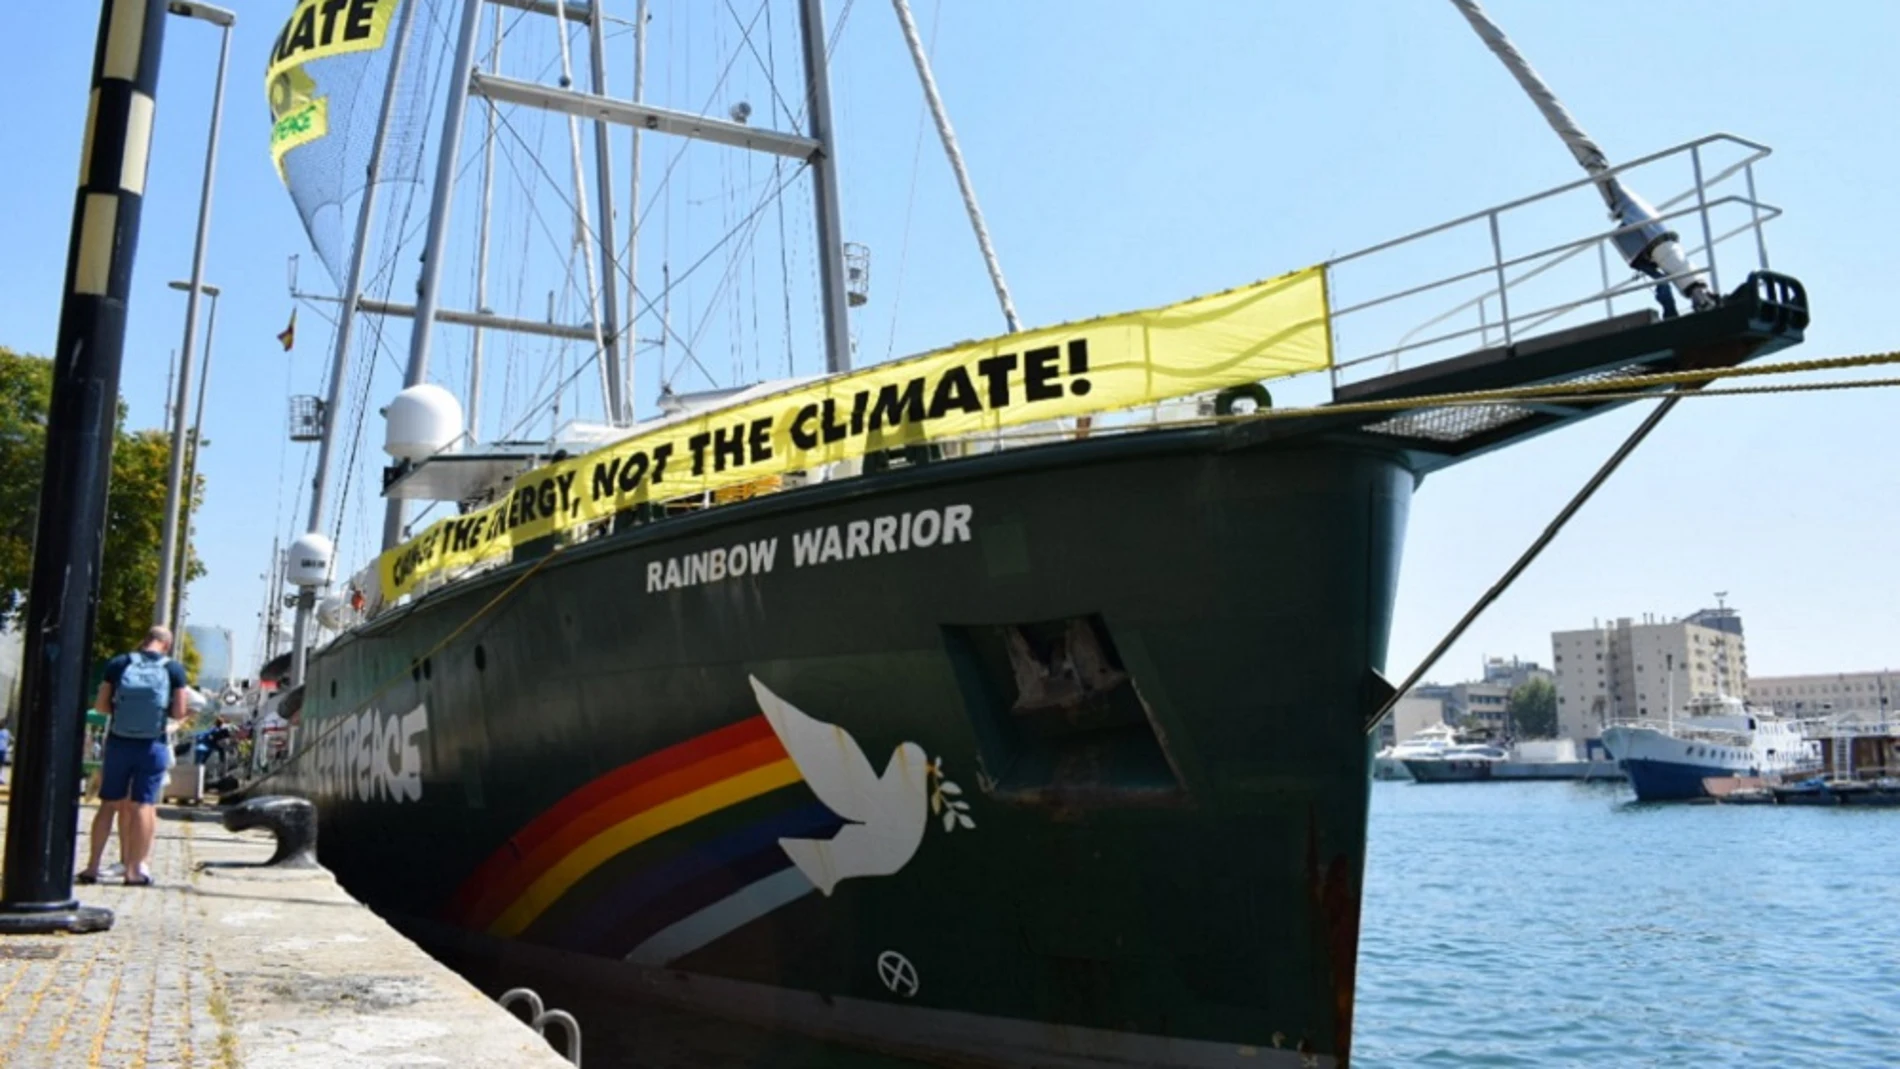 Barco Greenpeace